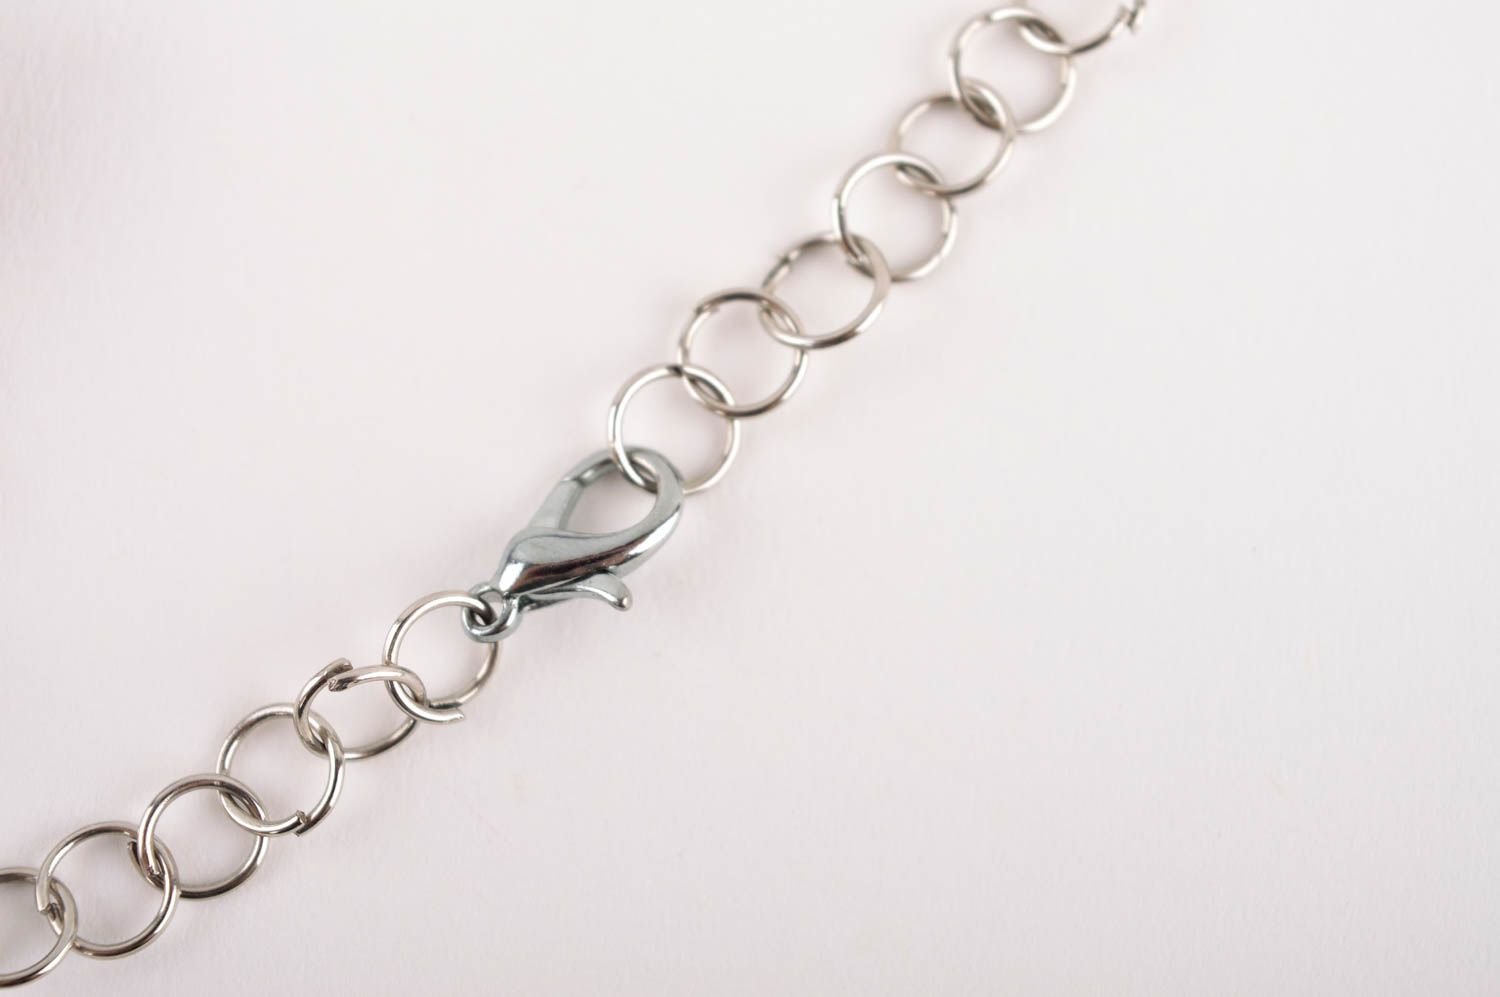 Handmade stylish necklace elegant designer necklace gift ideas for her photo 4